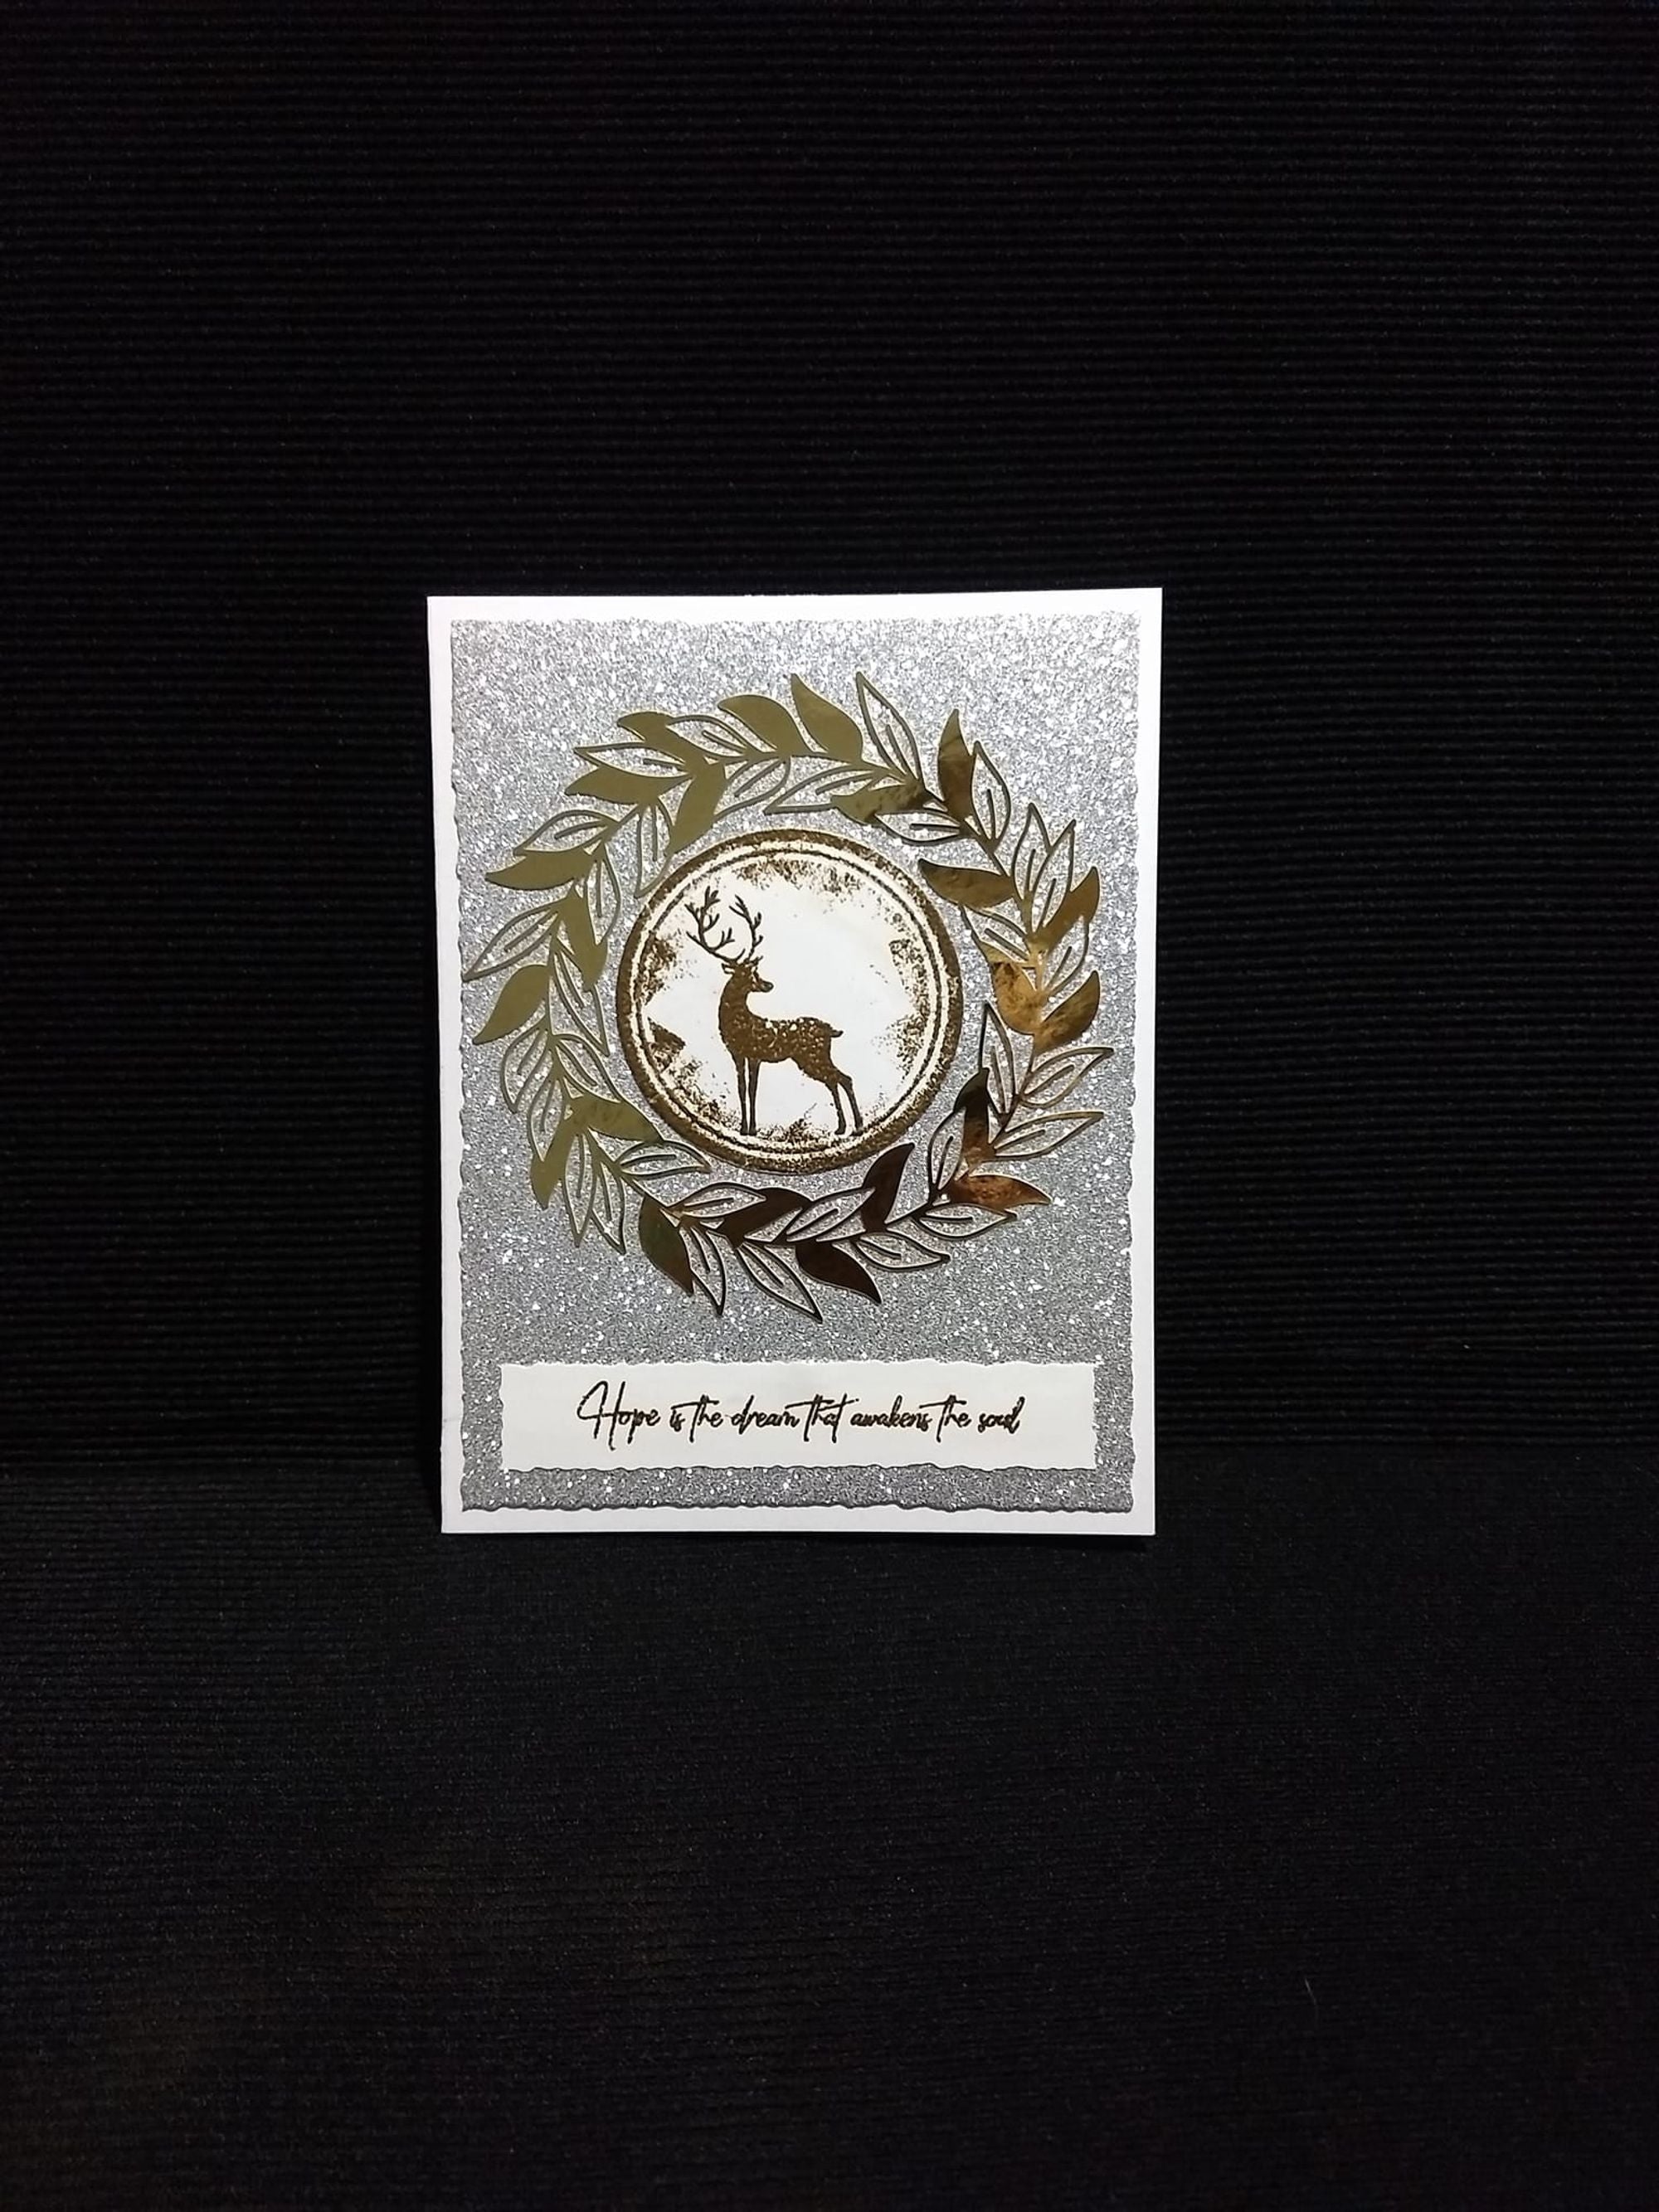 Fairy Hugs Stamps - Mini Deer